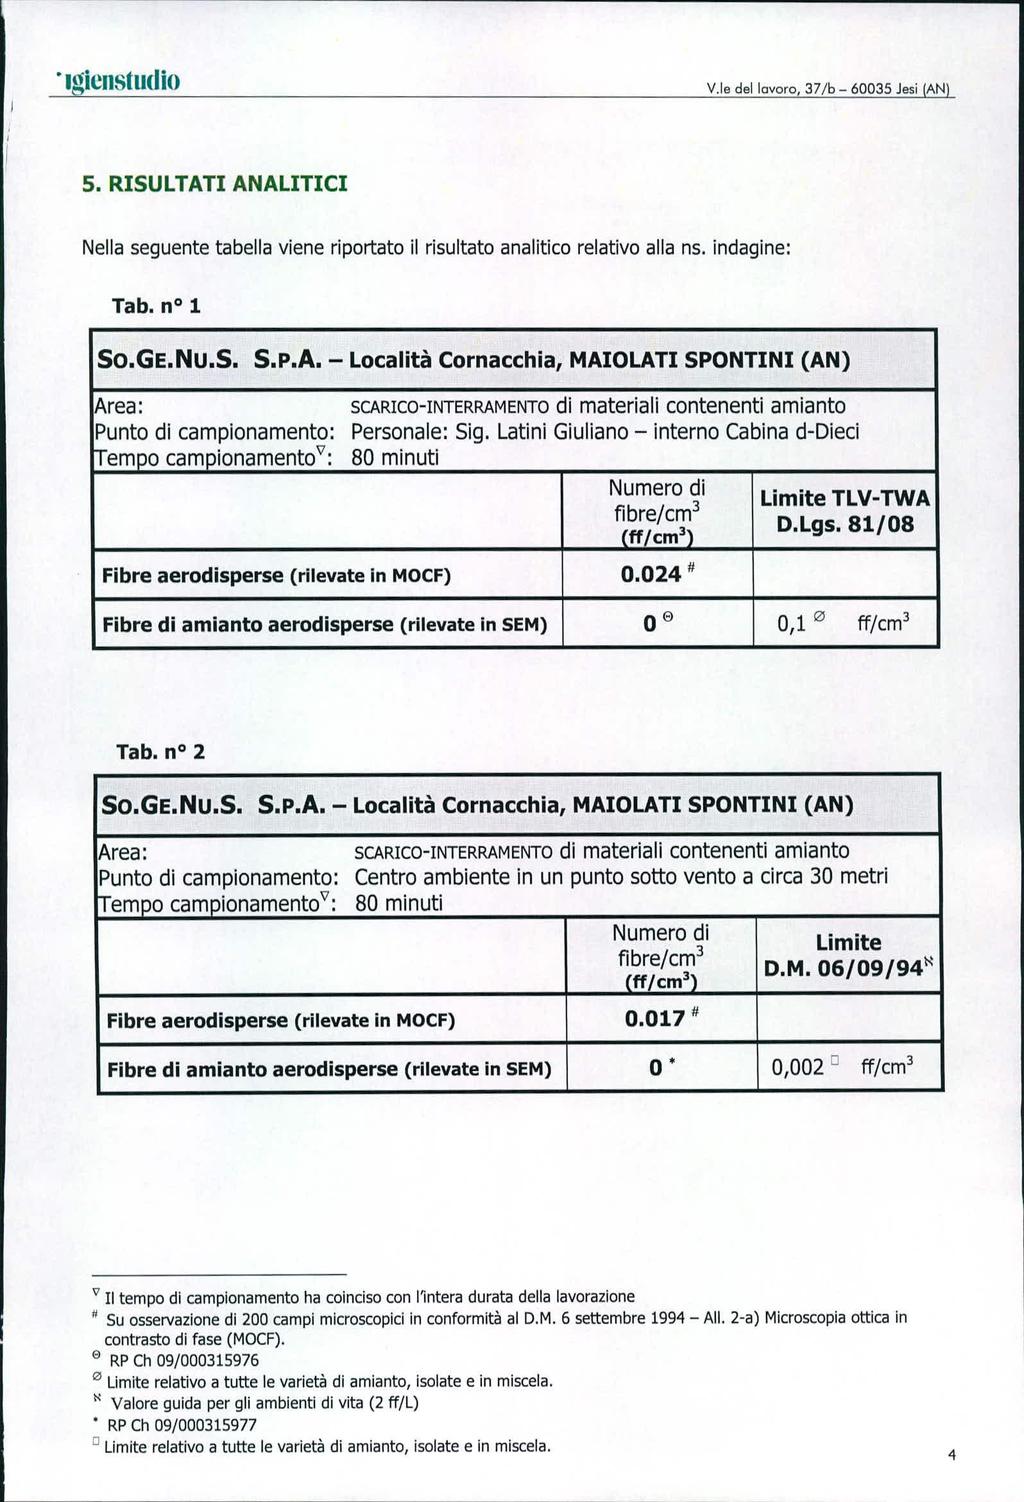 "glciisludlo V.ledellevore,37/b - 60035 Jesi(AN